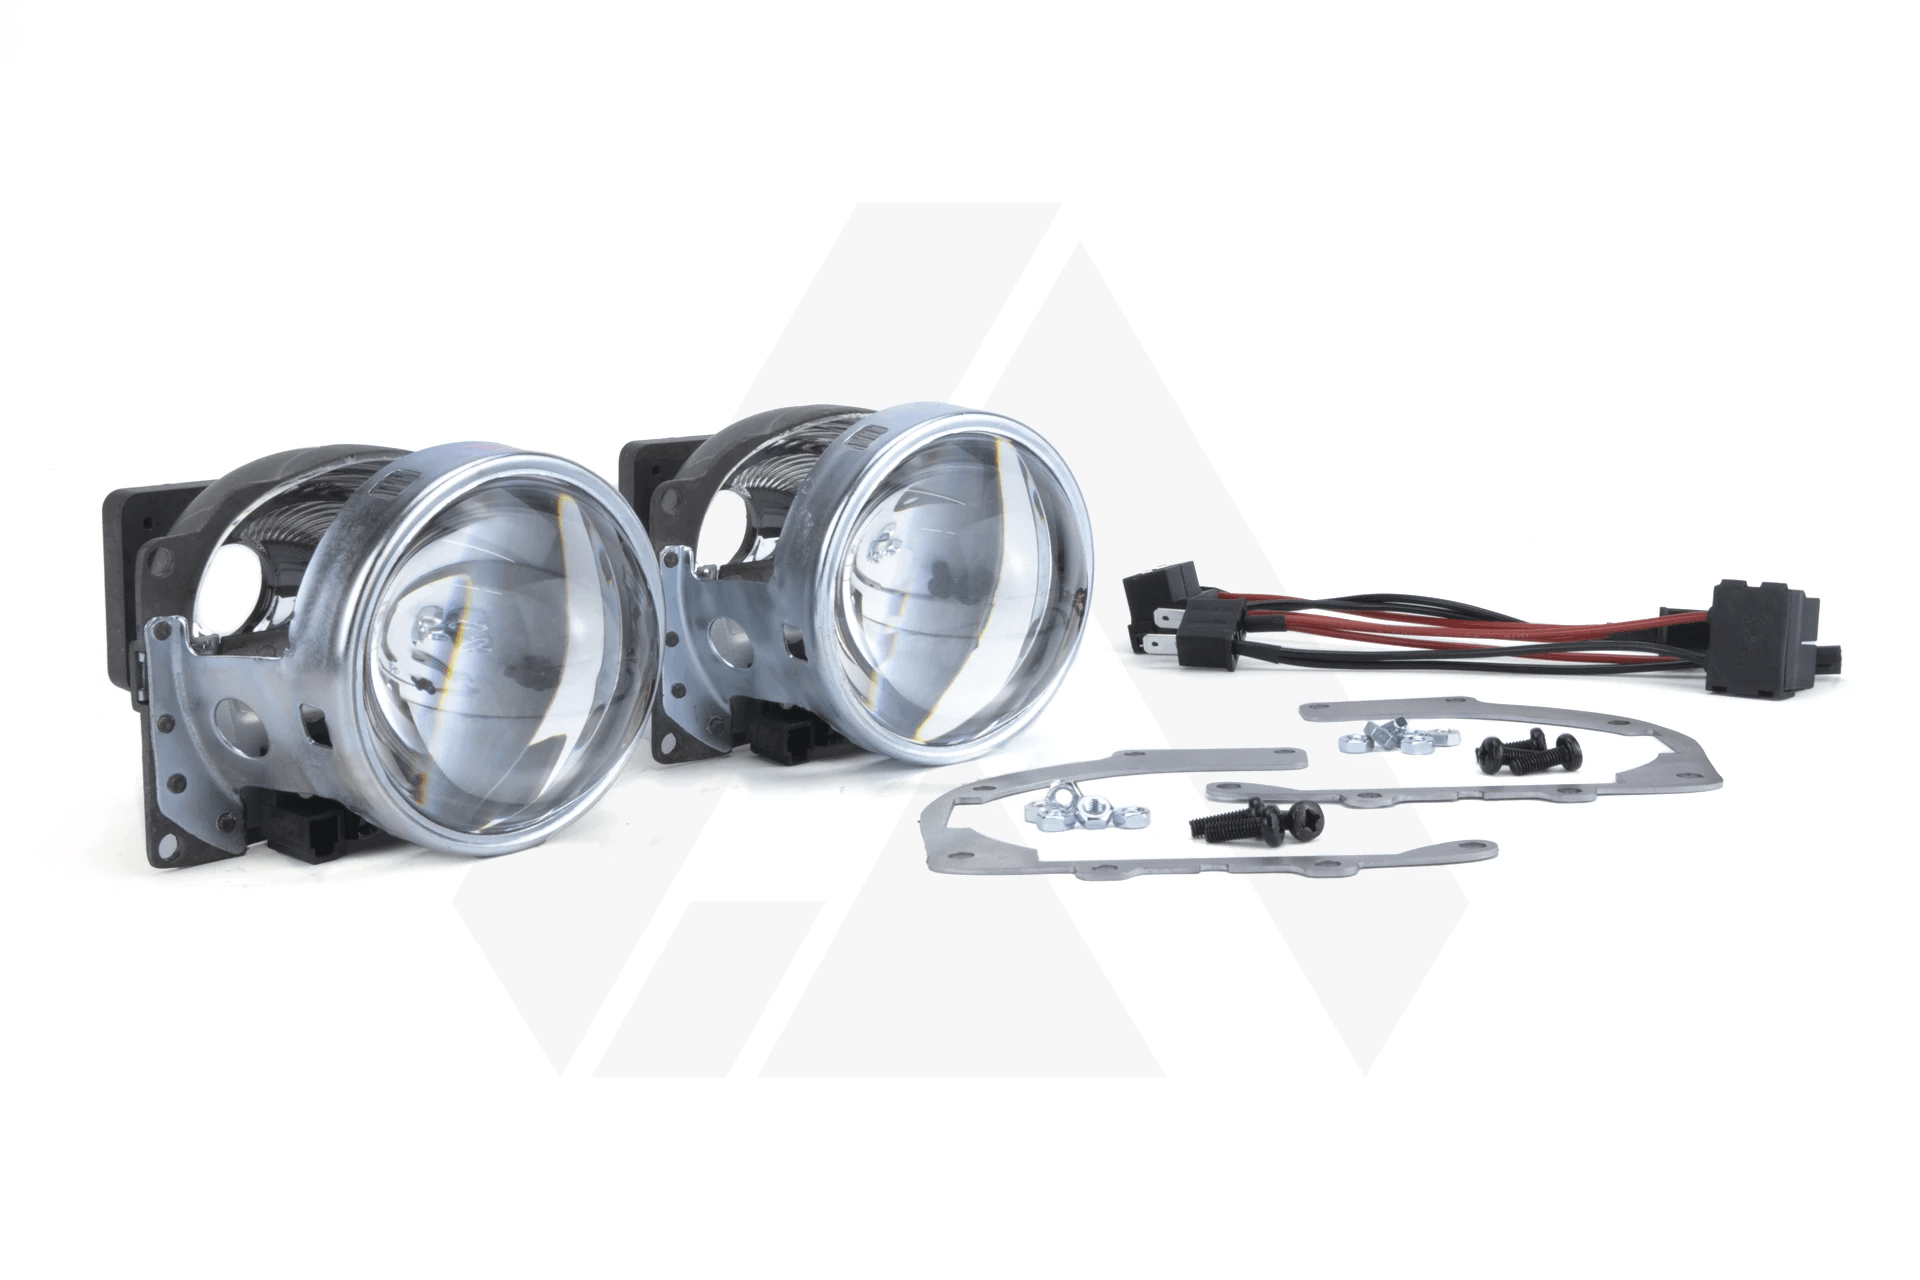 Subaru Legacy / Outback 09-14 bi-xenon headlight repair & upgrade kit for single xenon HID headlights